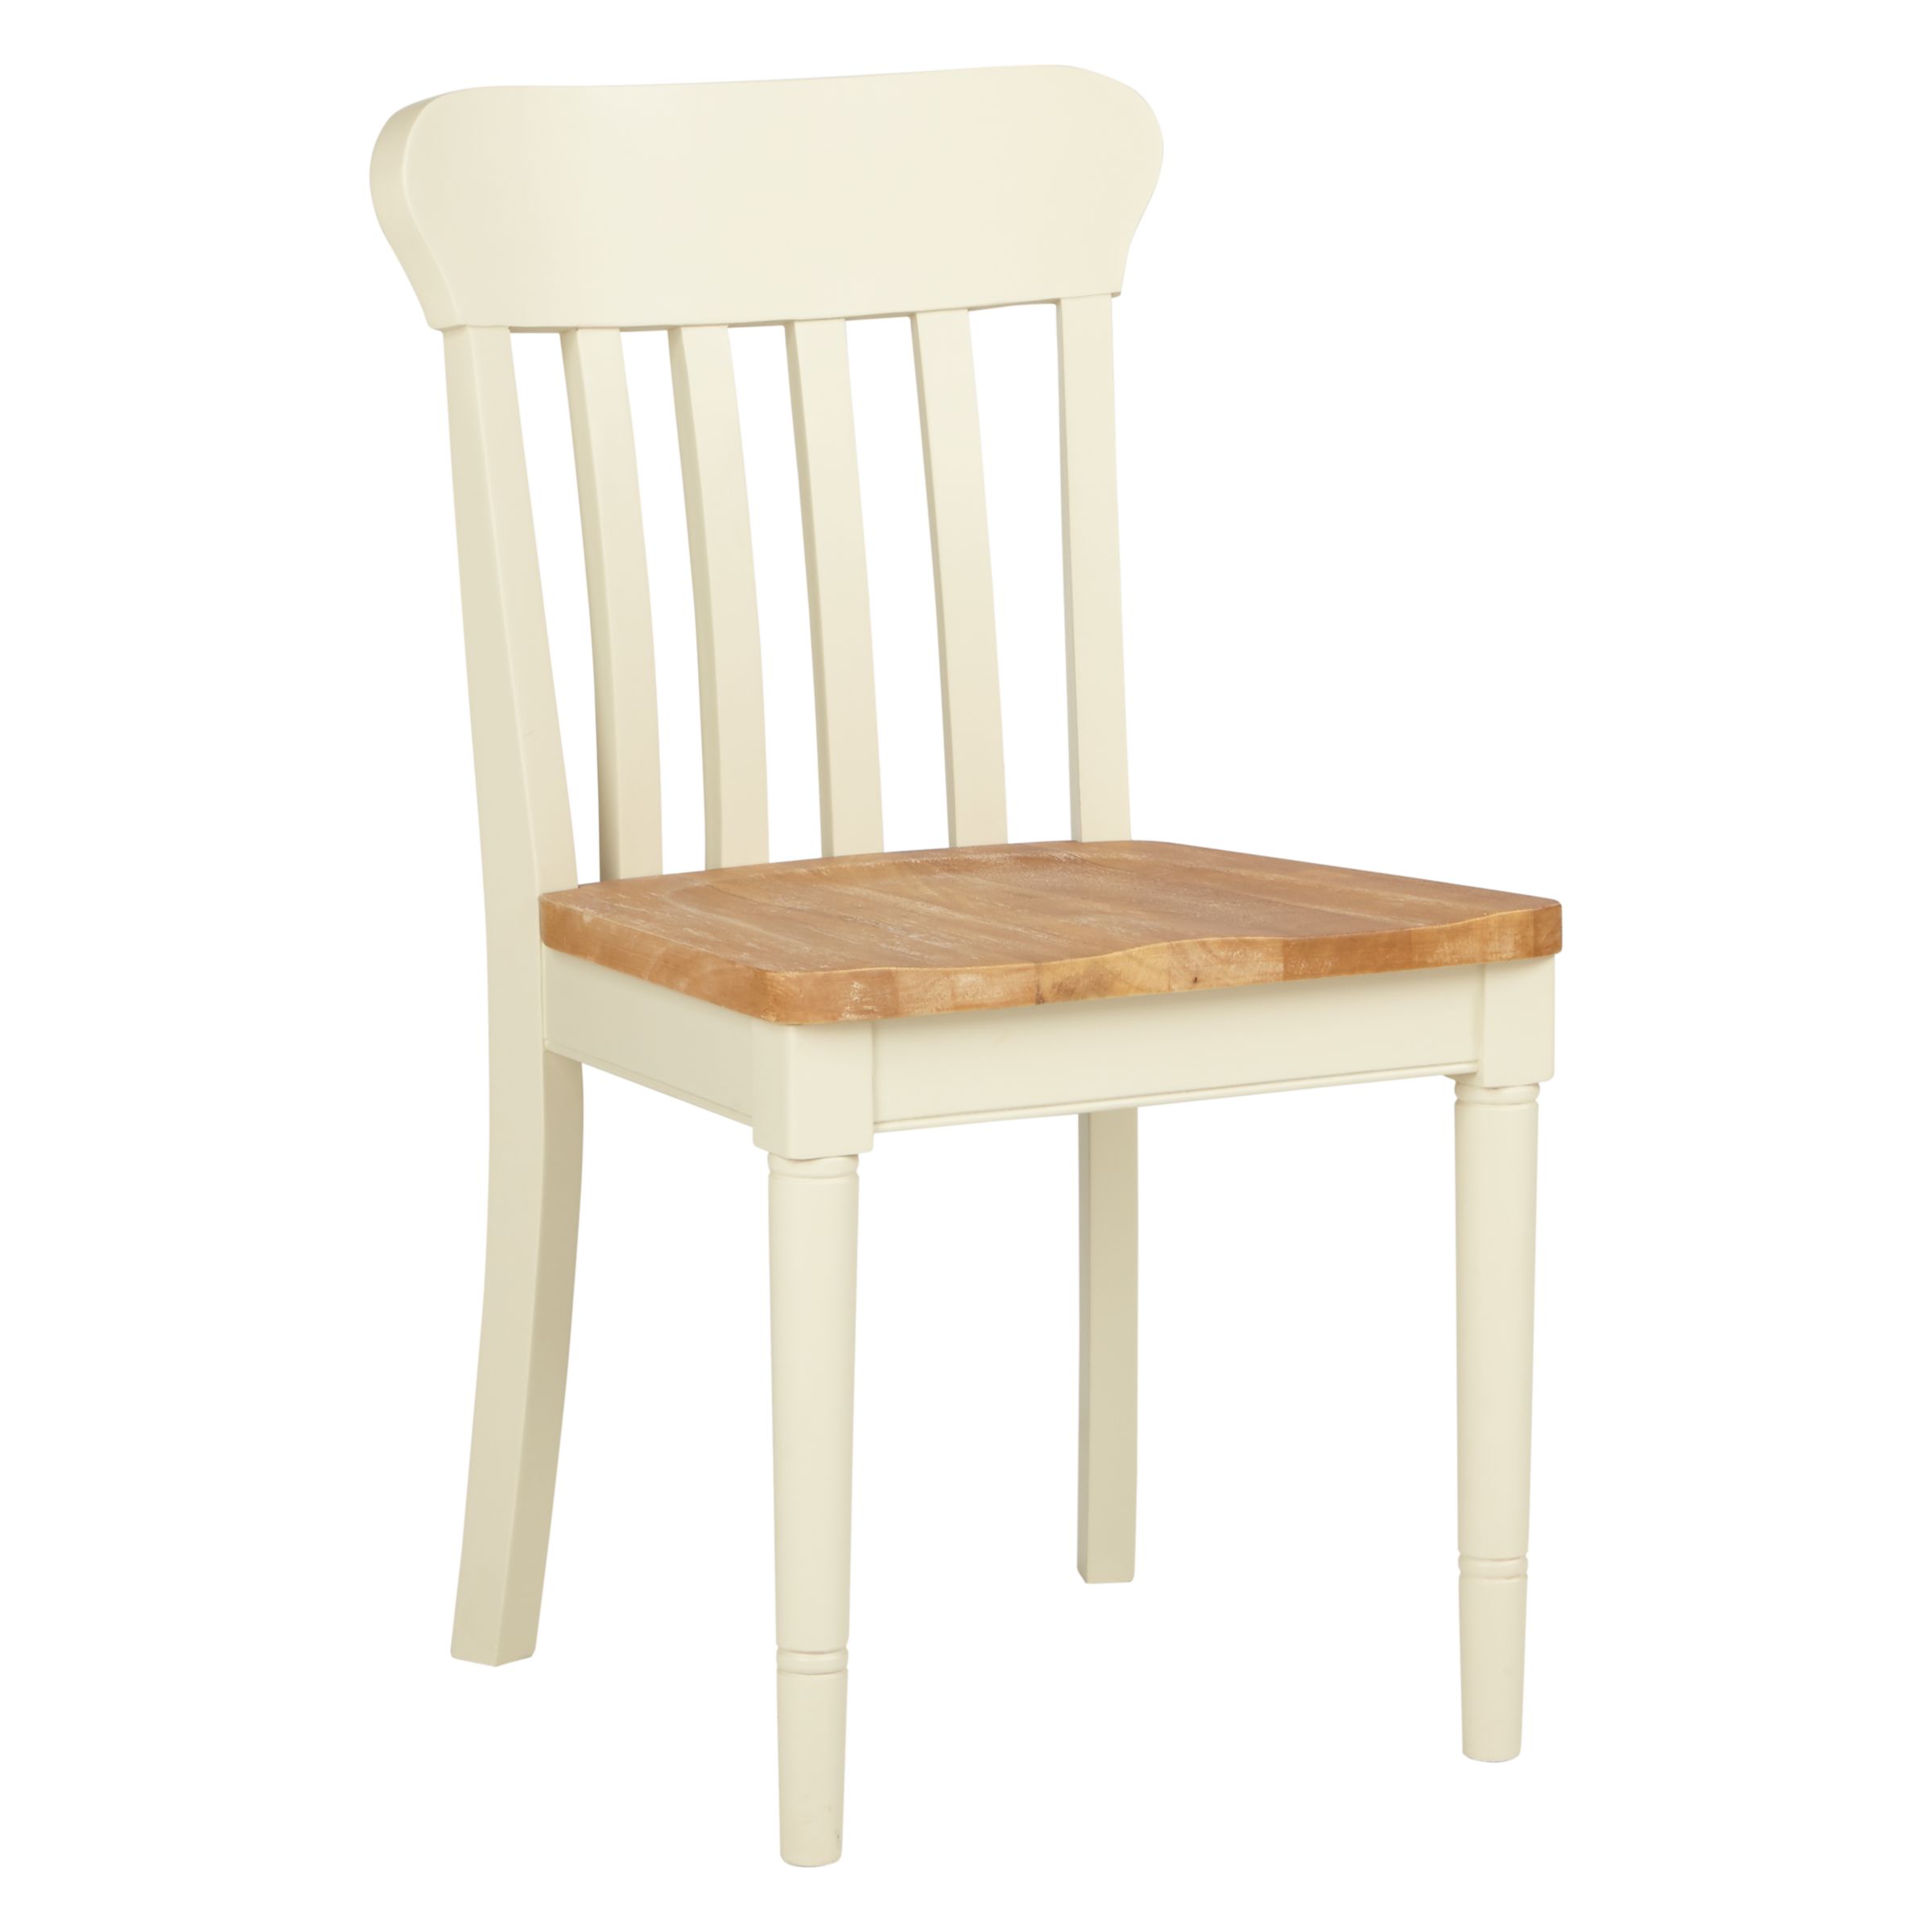 John Lewis & Partners Drift Dining Chair, Cream